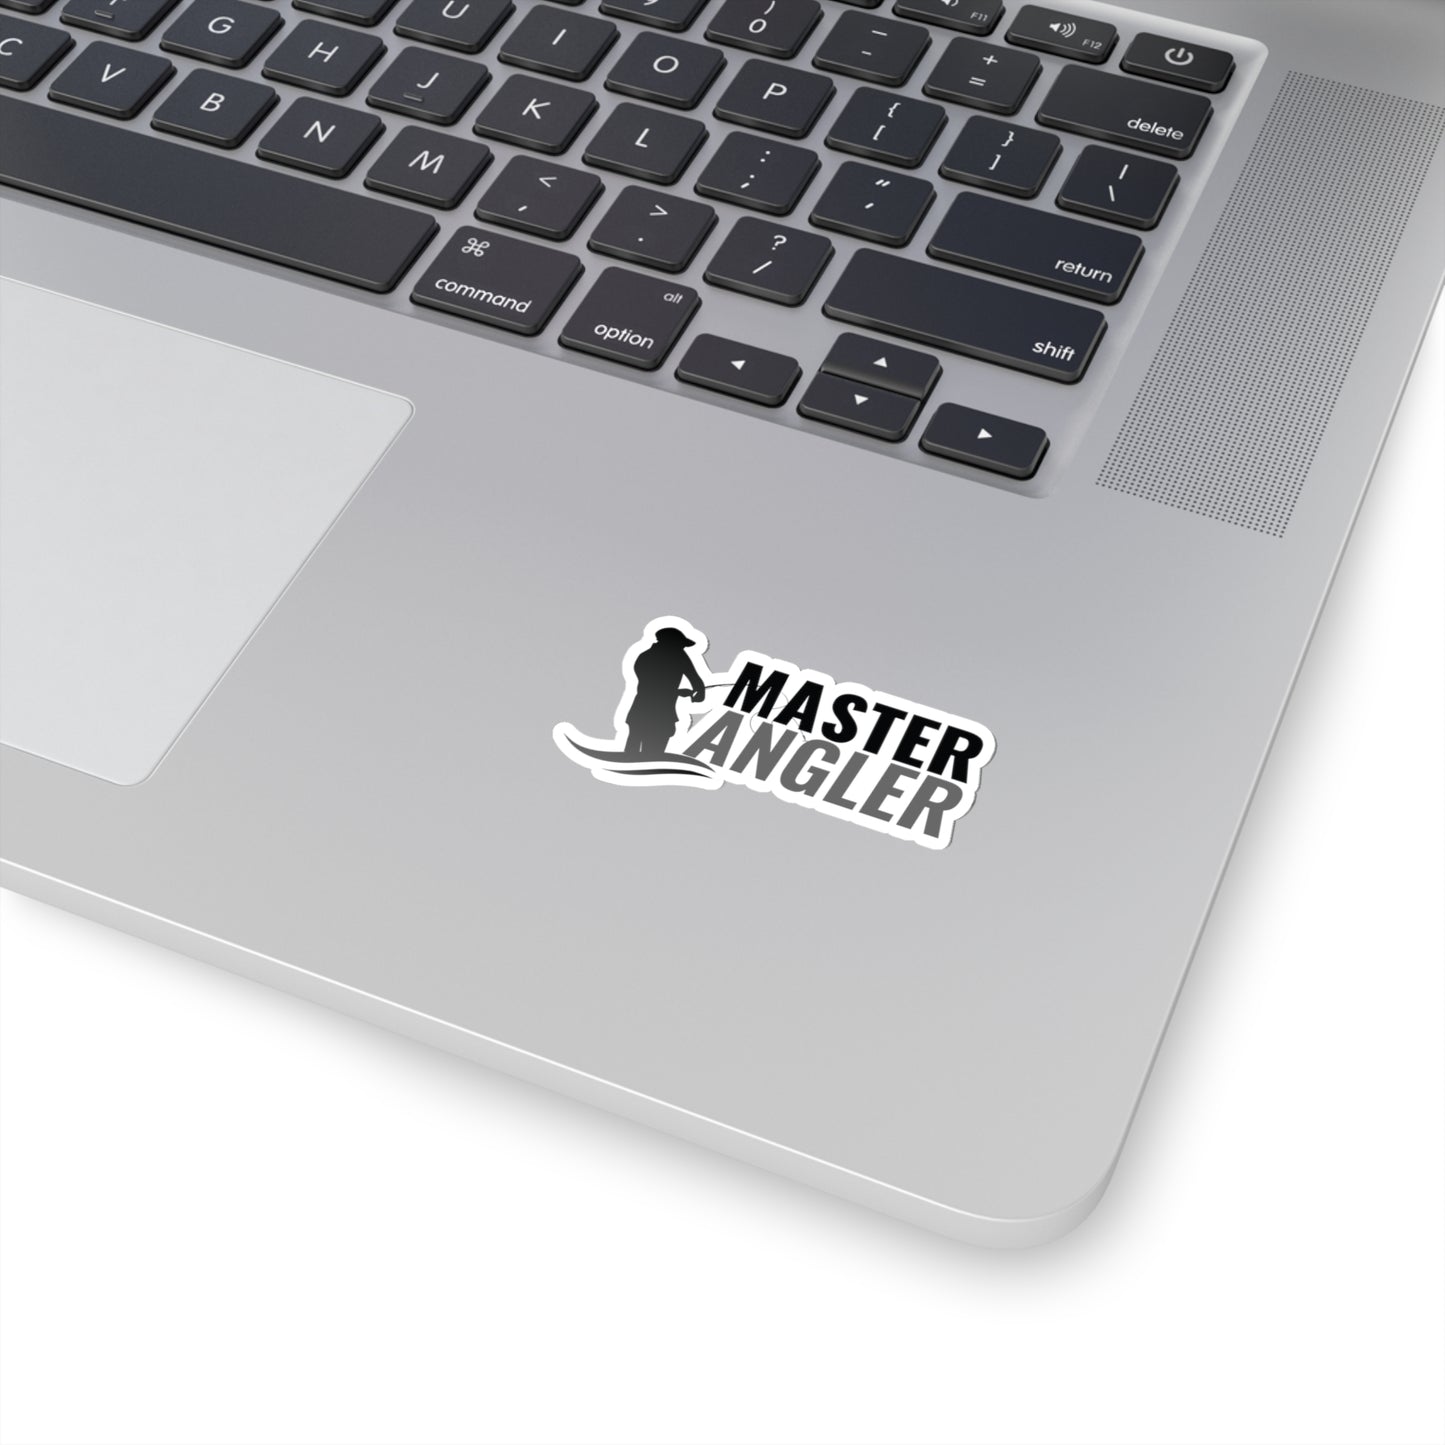 Master Angler Sticker - Black